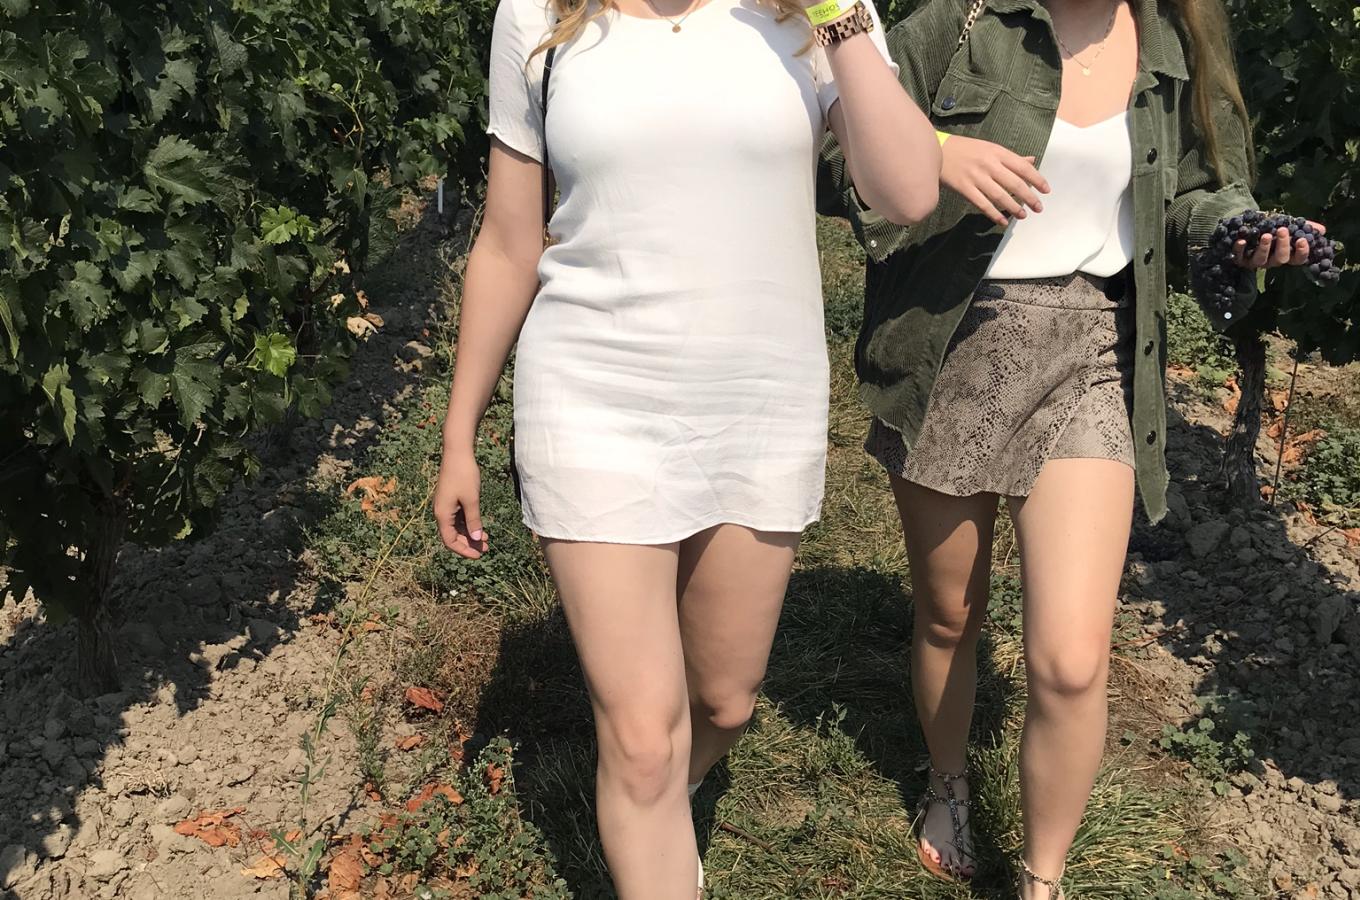 Summer stroll thru the vineyard